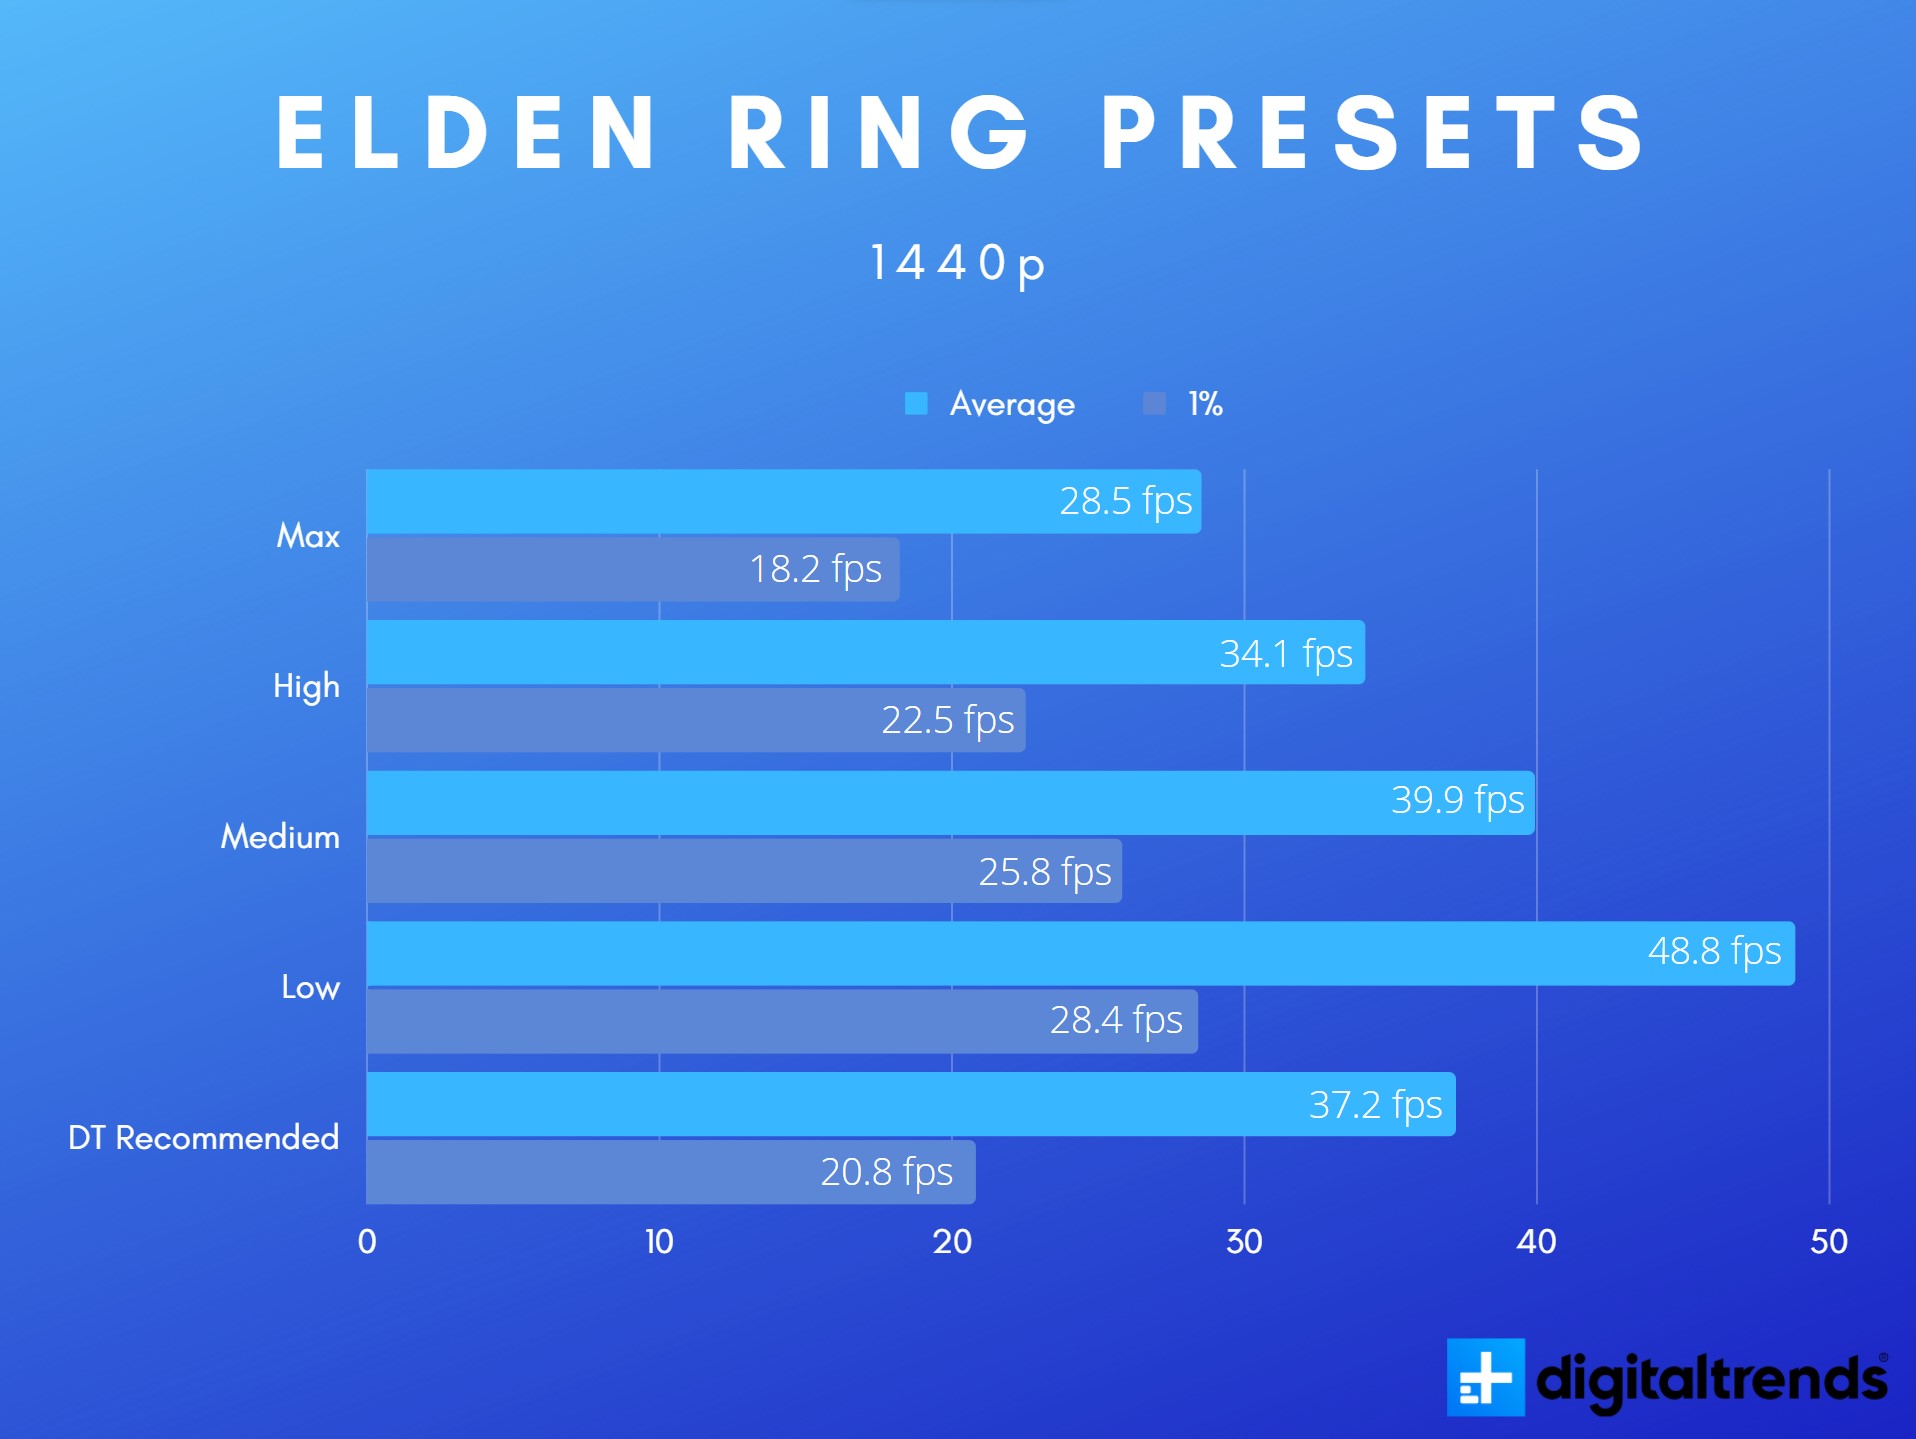 ELDEN RING on X: PC specifications for #ELDENRING.